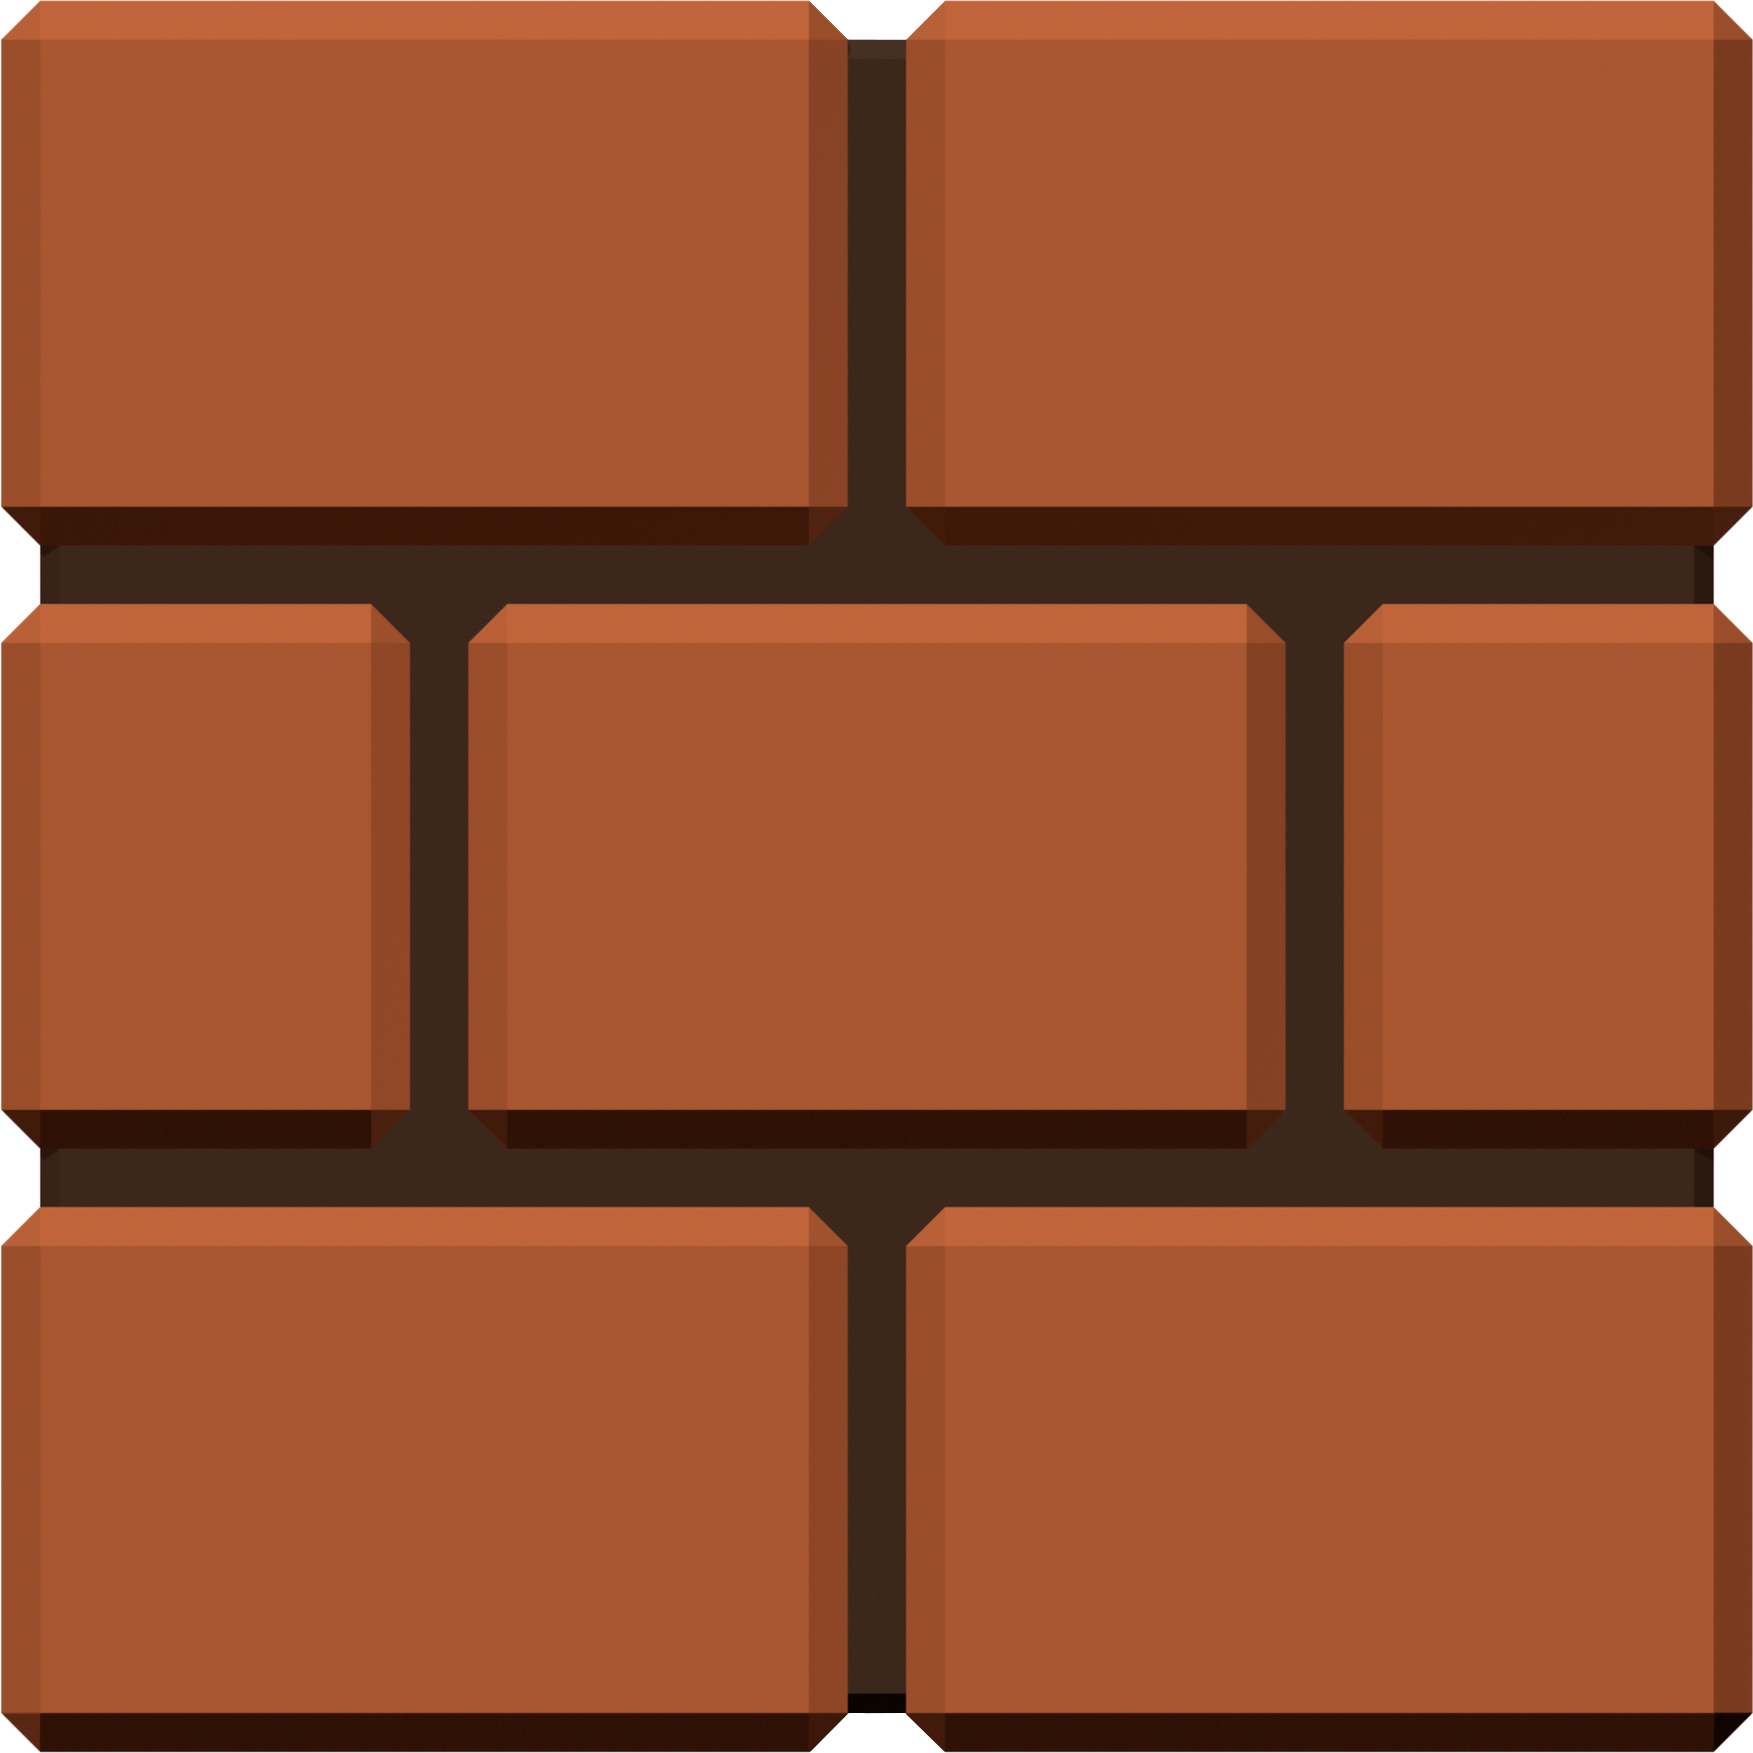 Brick block